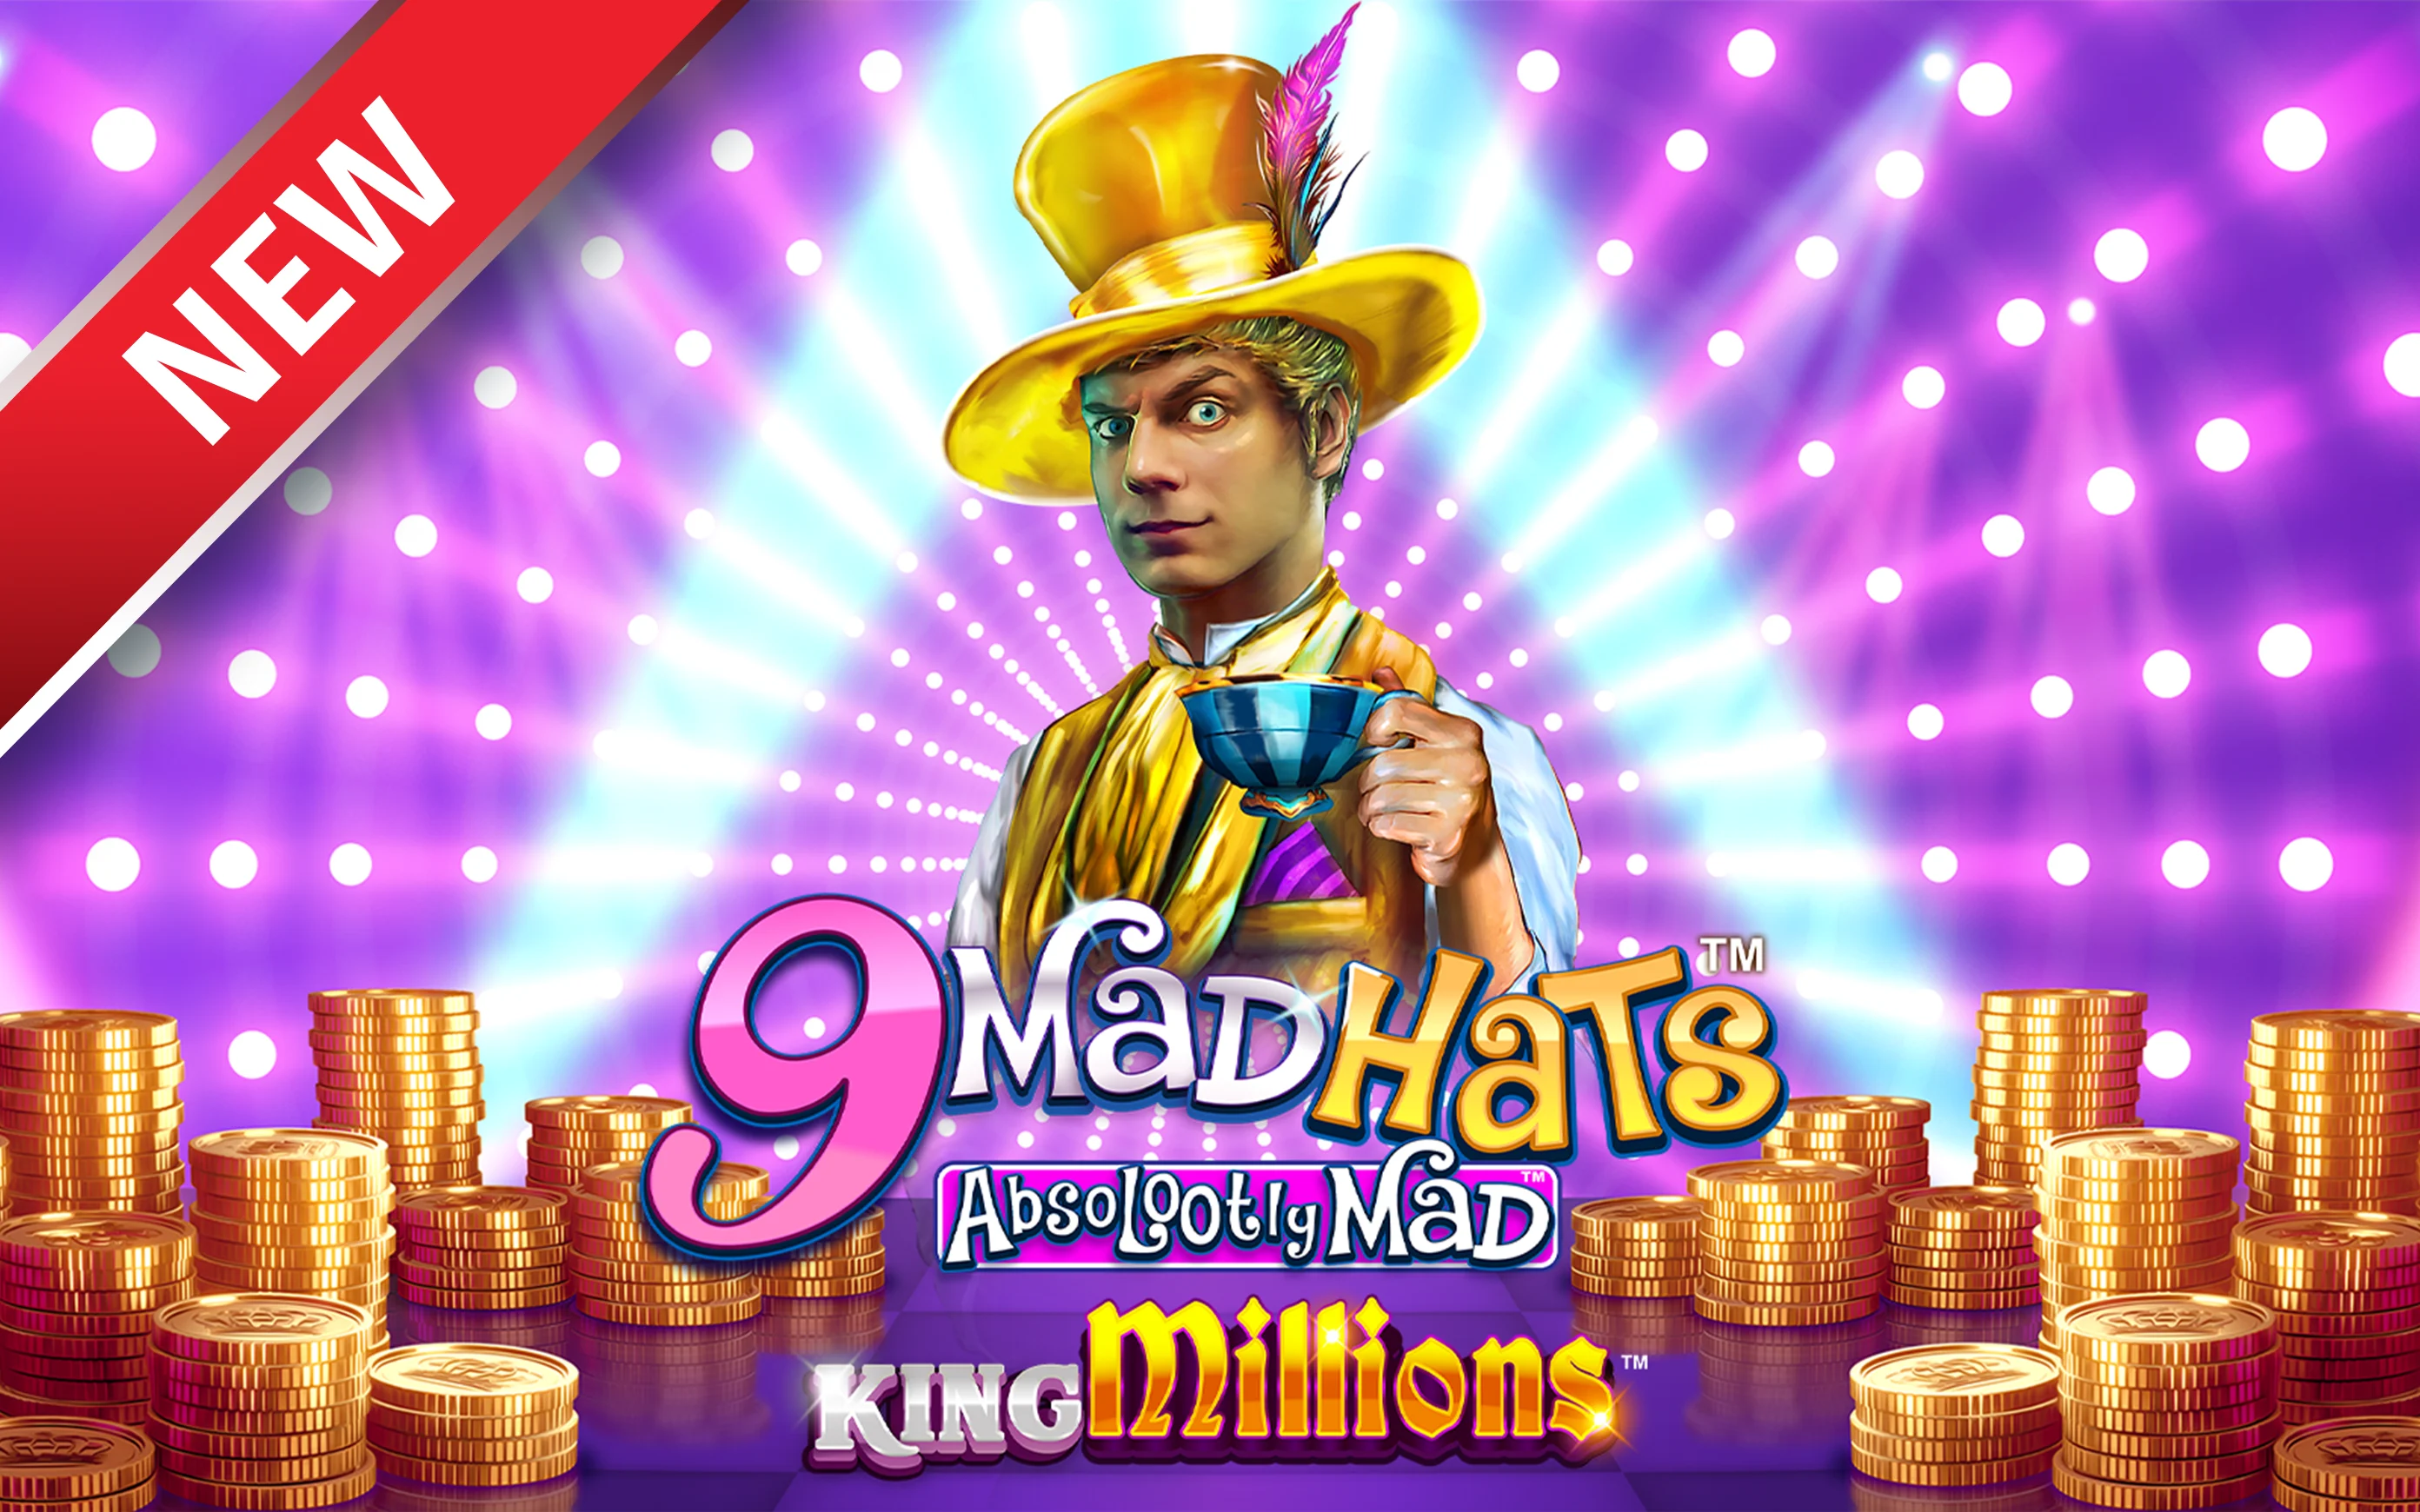 Грайте у 9 Mad Hats™ King Millions™ в онлайн-казино Starcasino.be